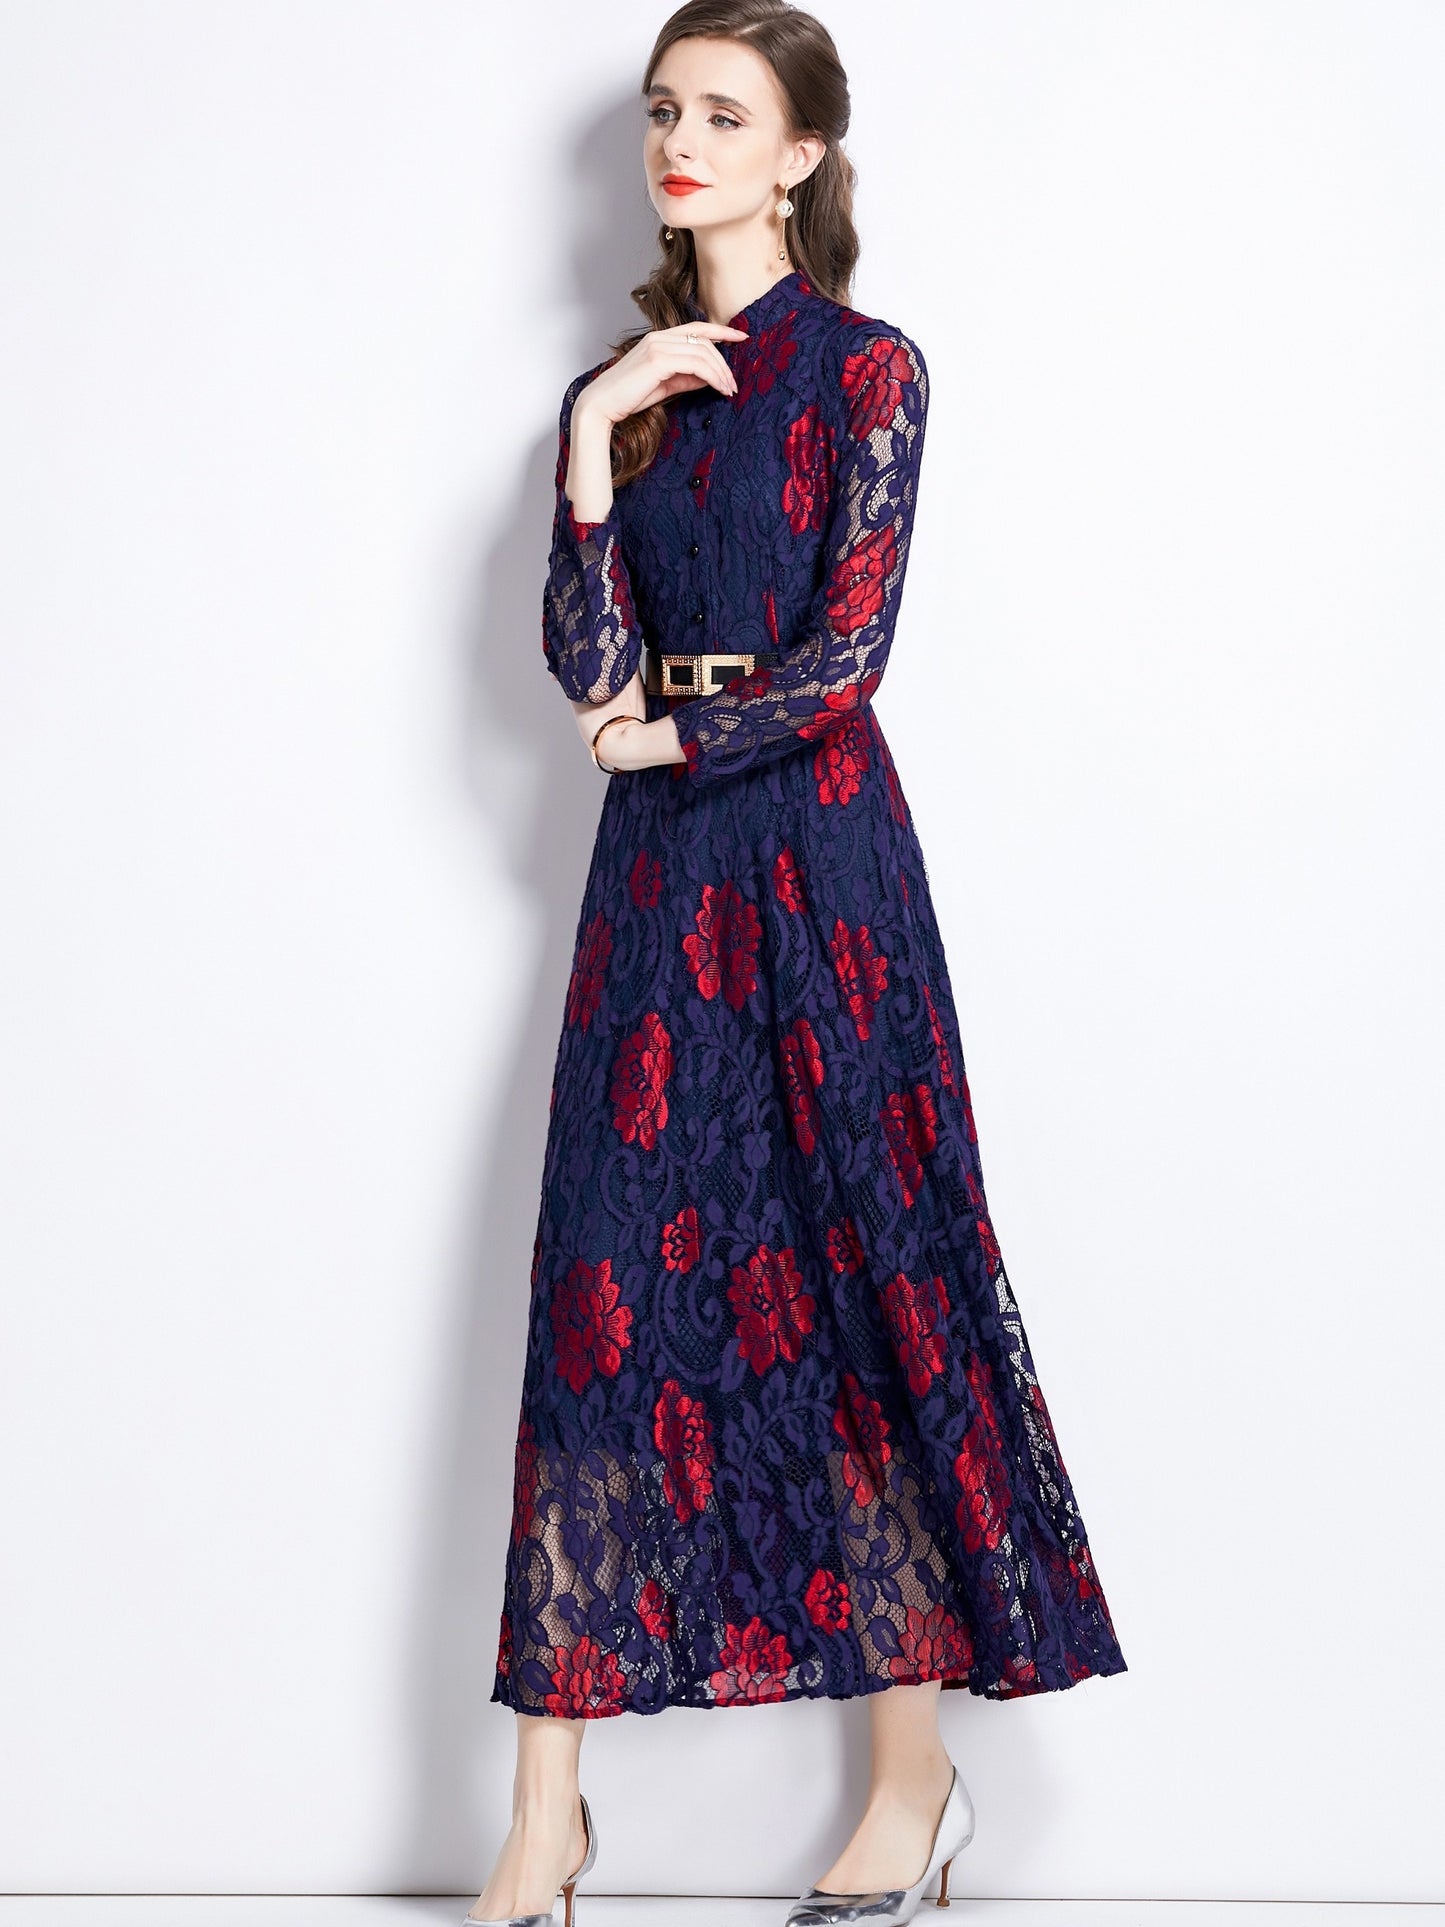 Floral Print Contrast Lace Dress, Elegant Button Front Party Maxi Dress, Women's Clothing